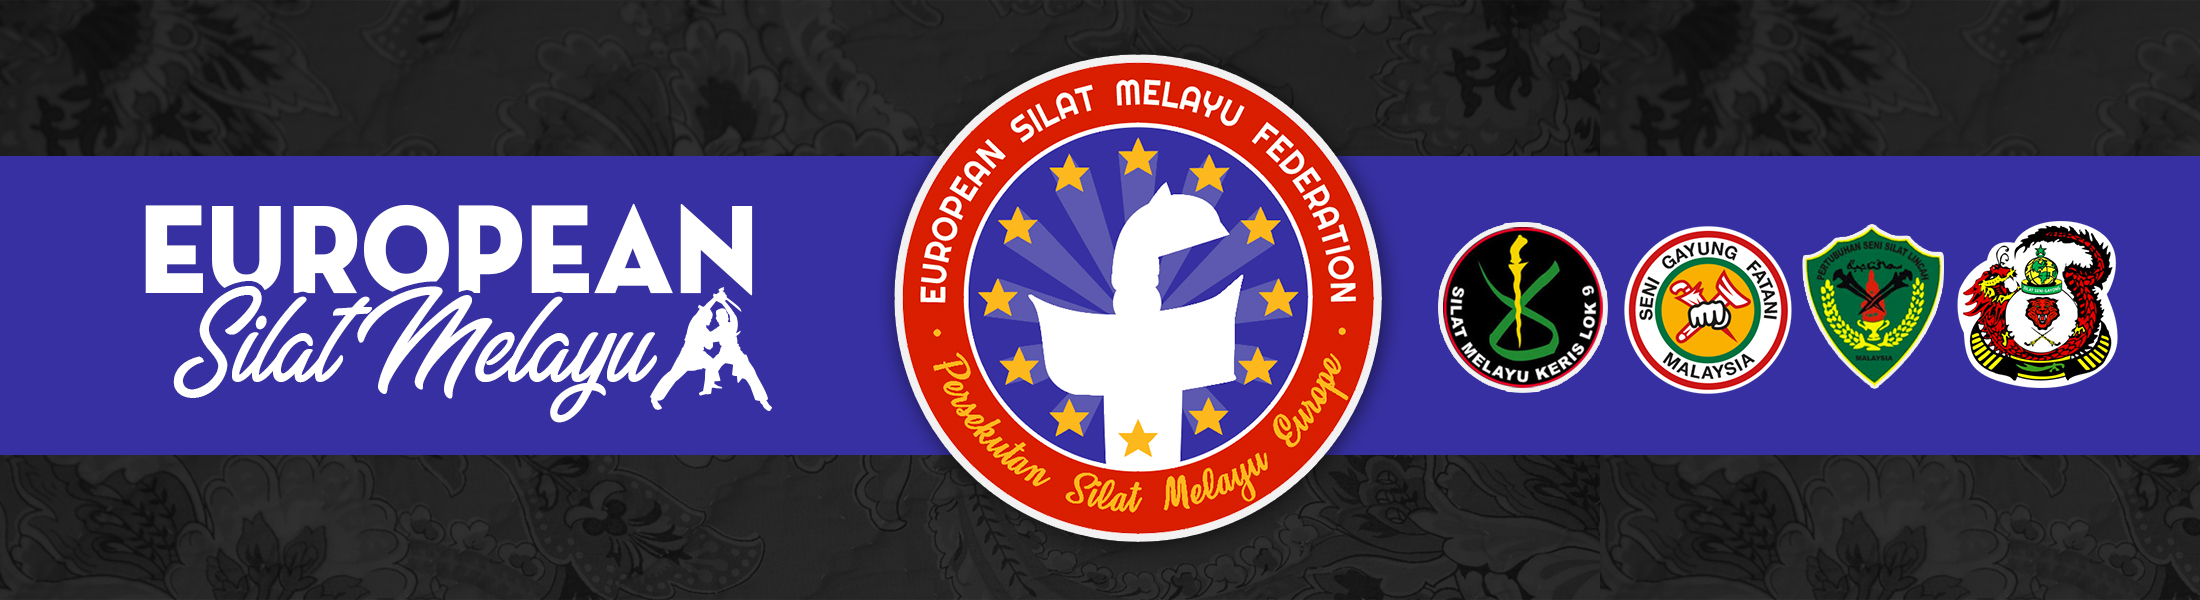 European Silat Melayu Federation - Header